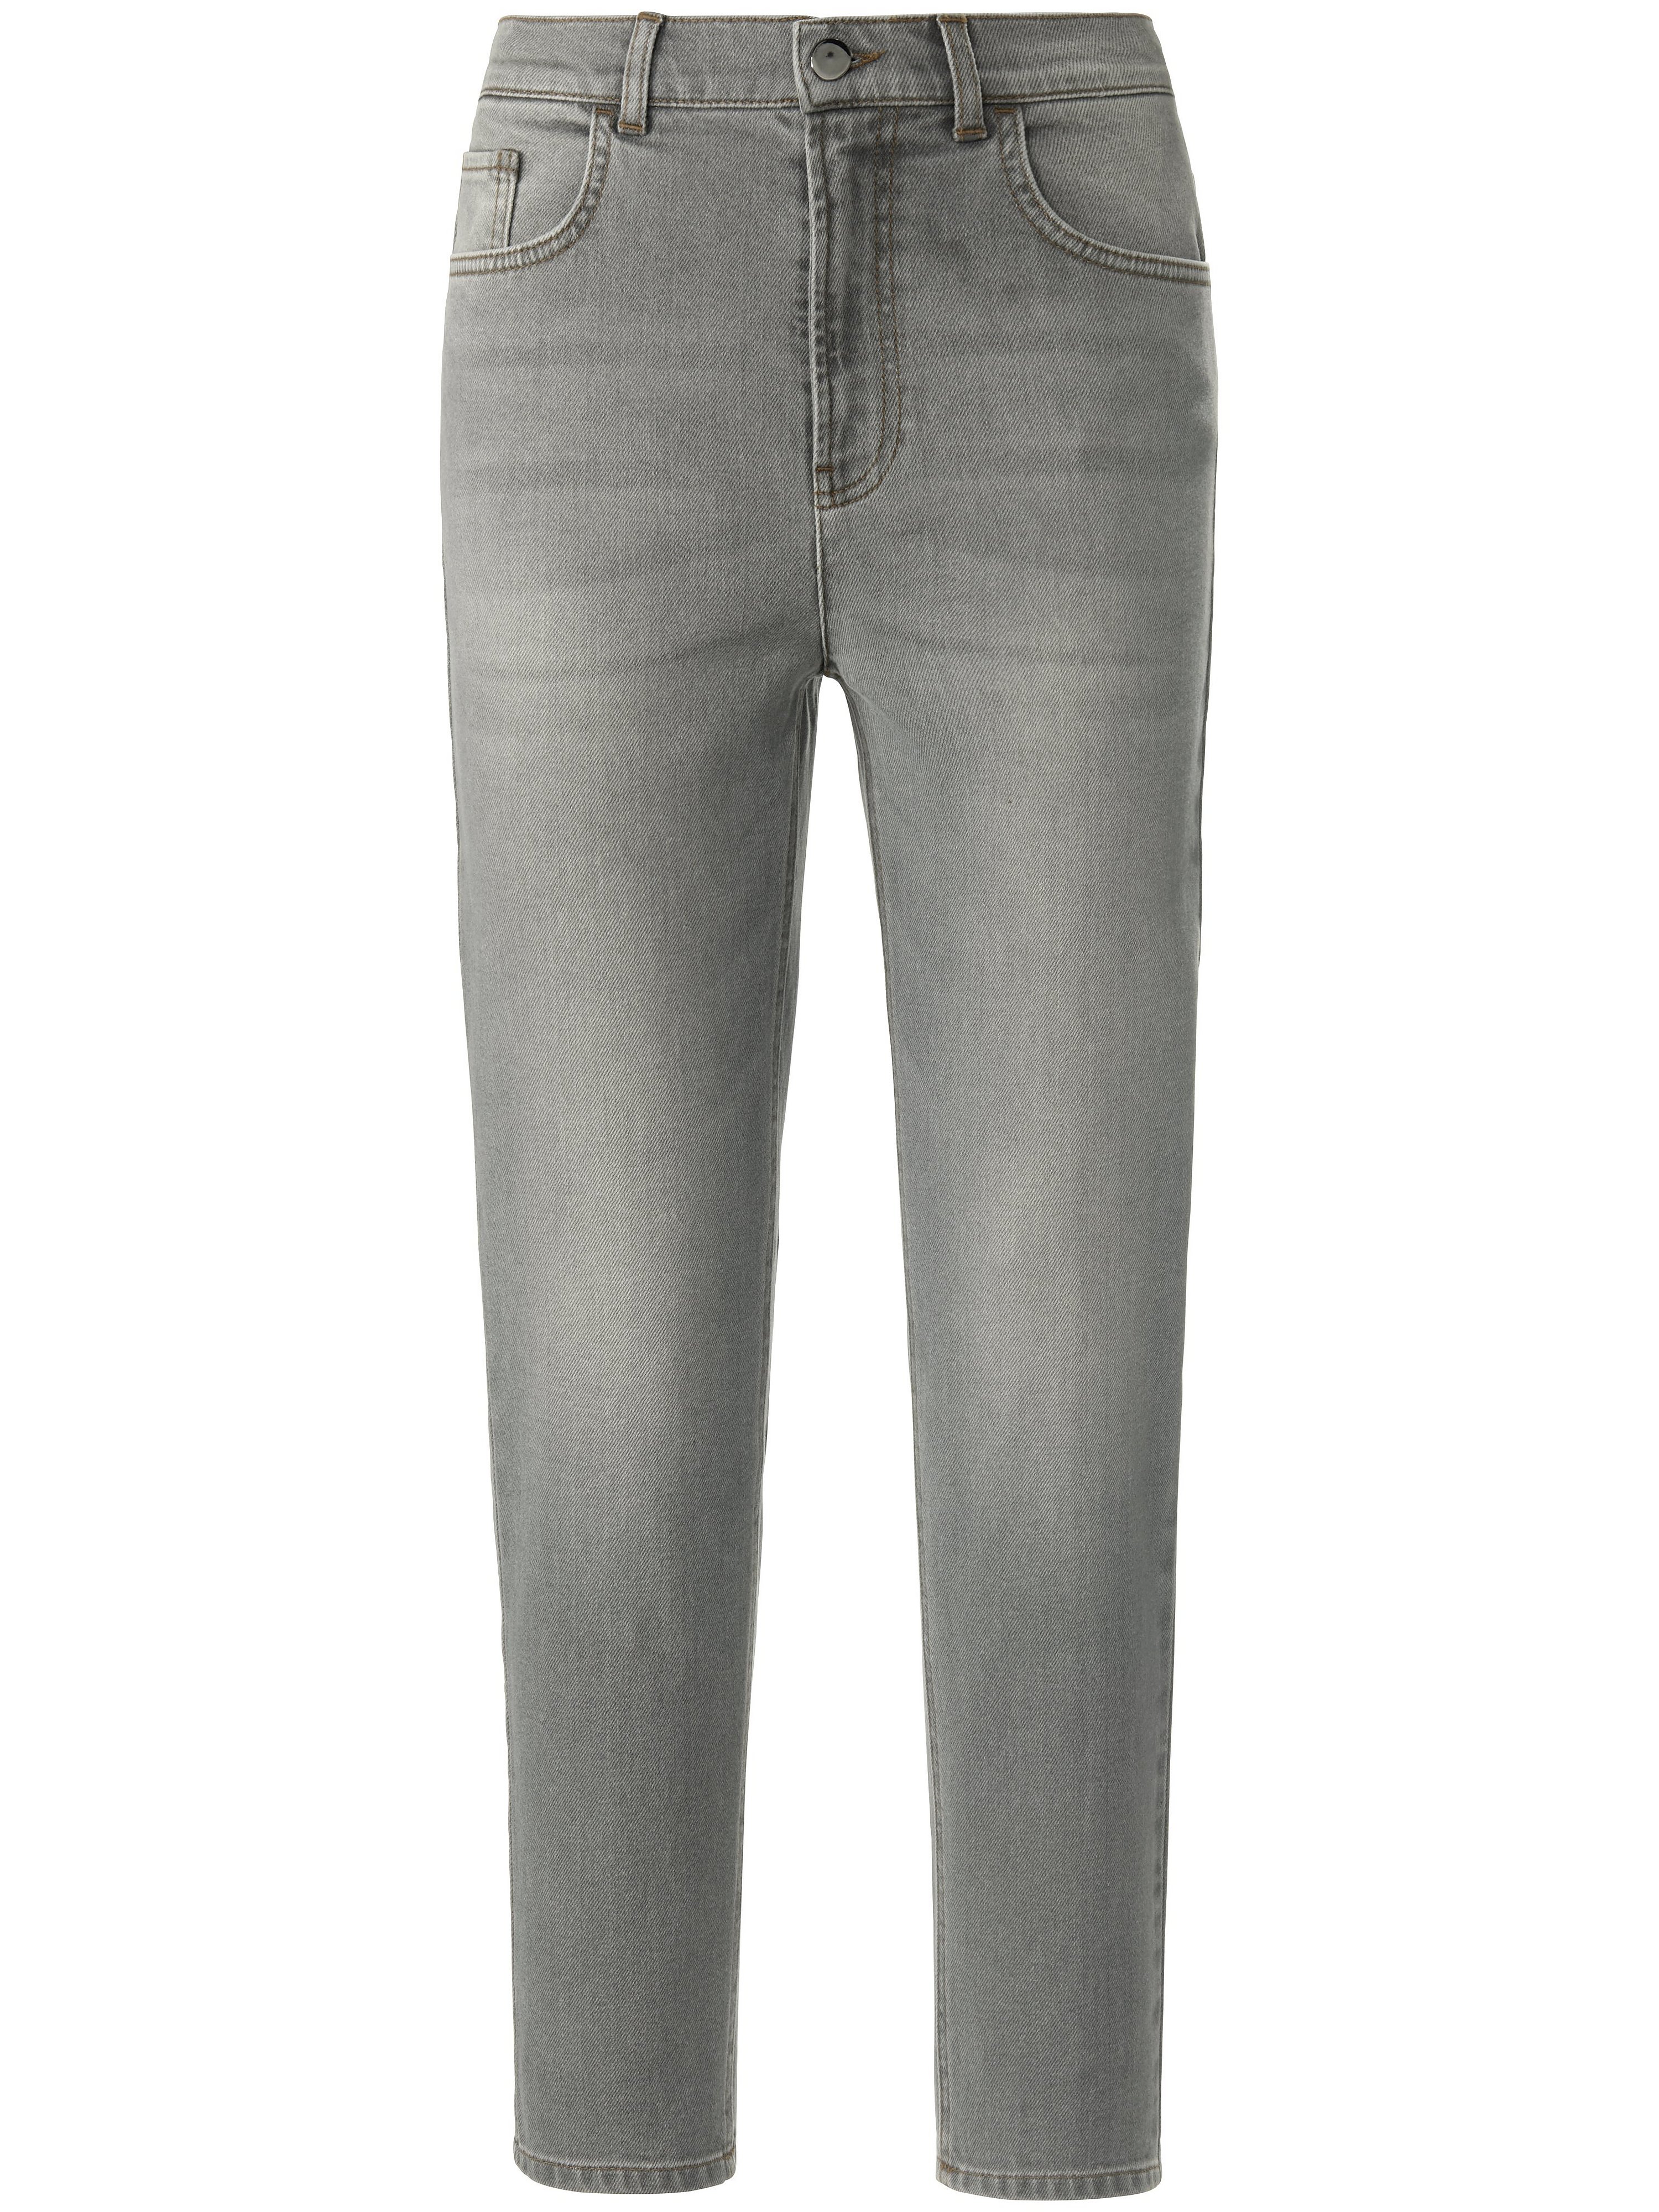 Jeans in 5 pocketsmodel Van DAY.LIKE grijs